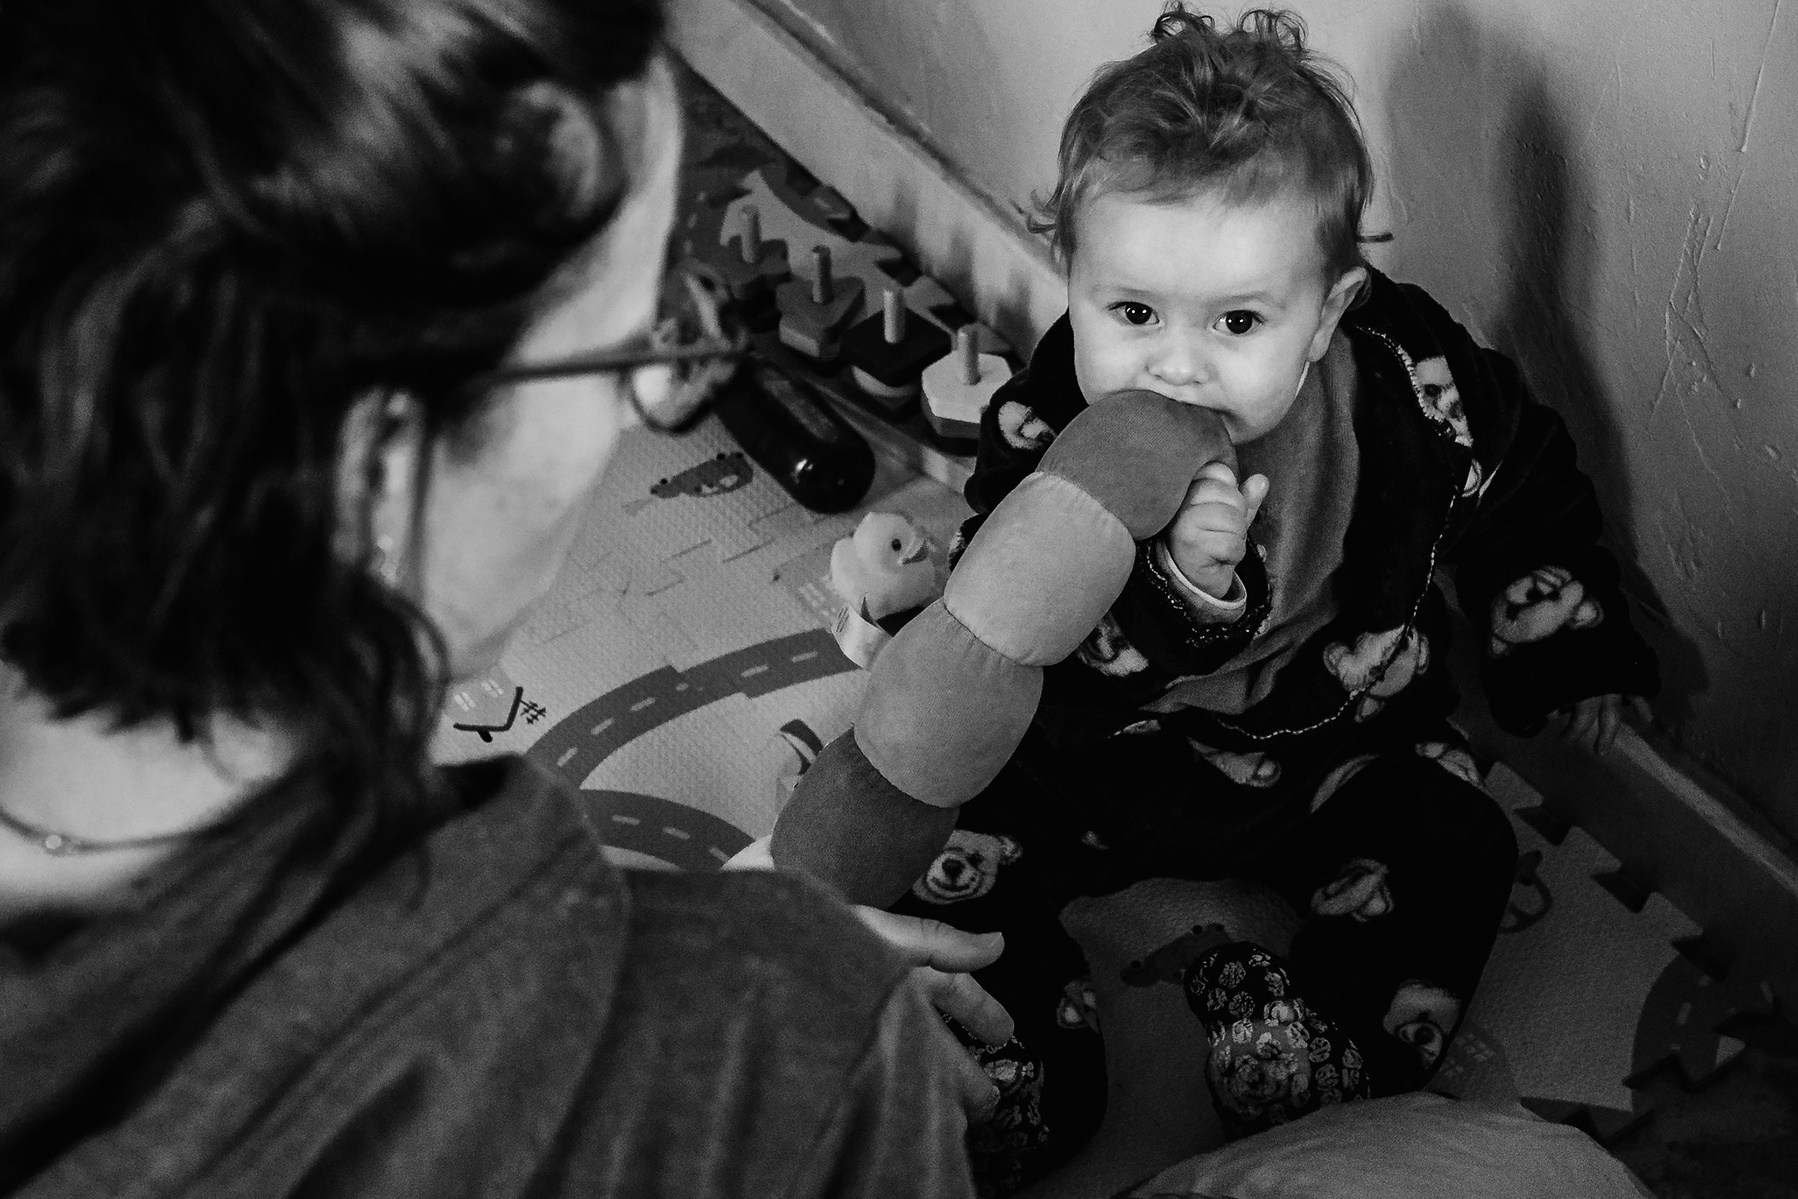 bebé rodeado de sus juguetes bajo la mirada de su mama,  fotografia de familia Manuela Franjou